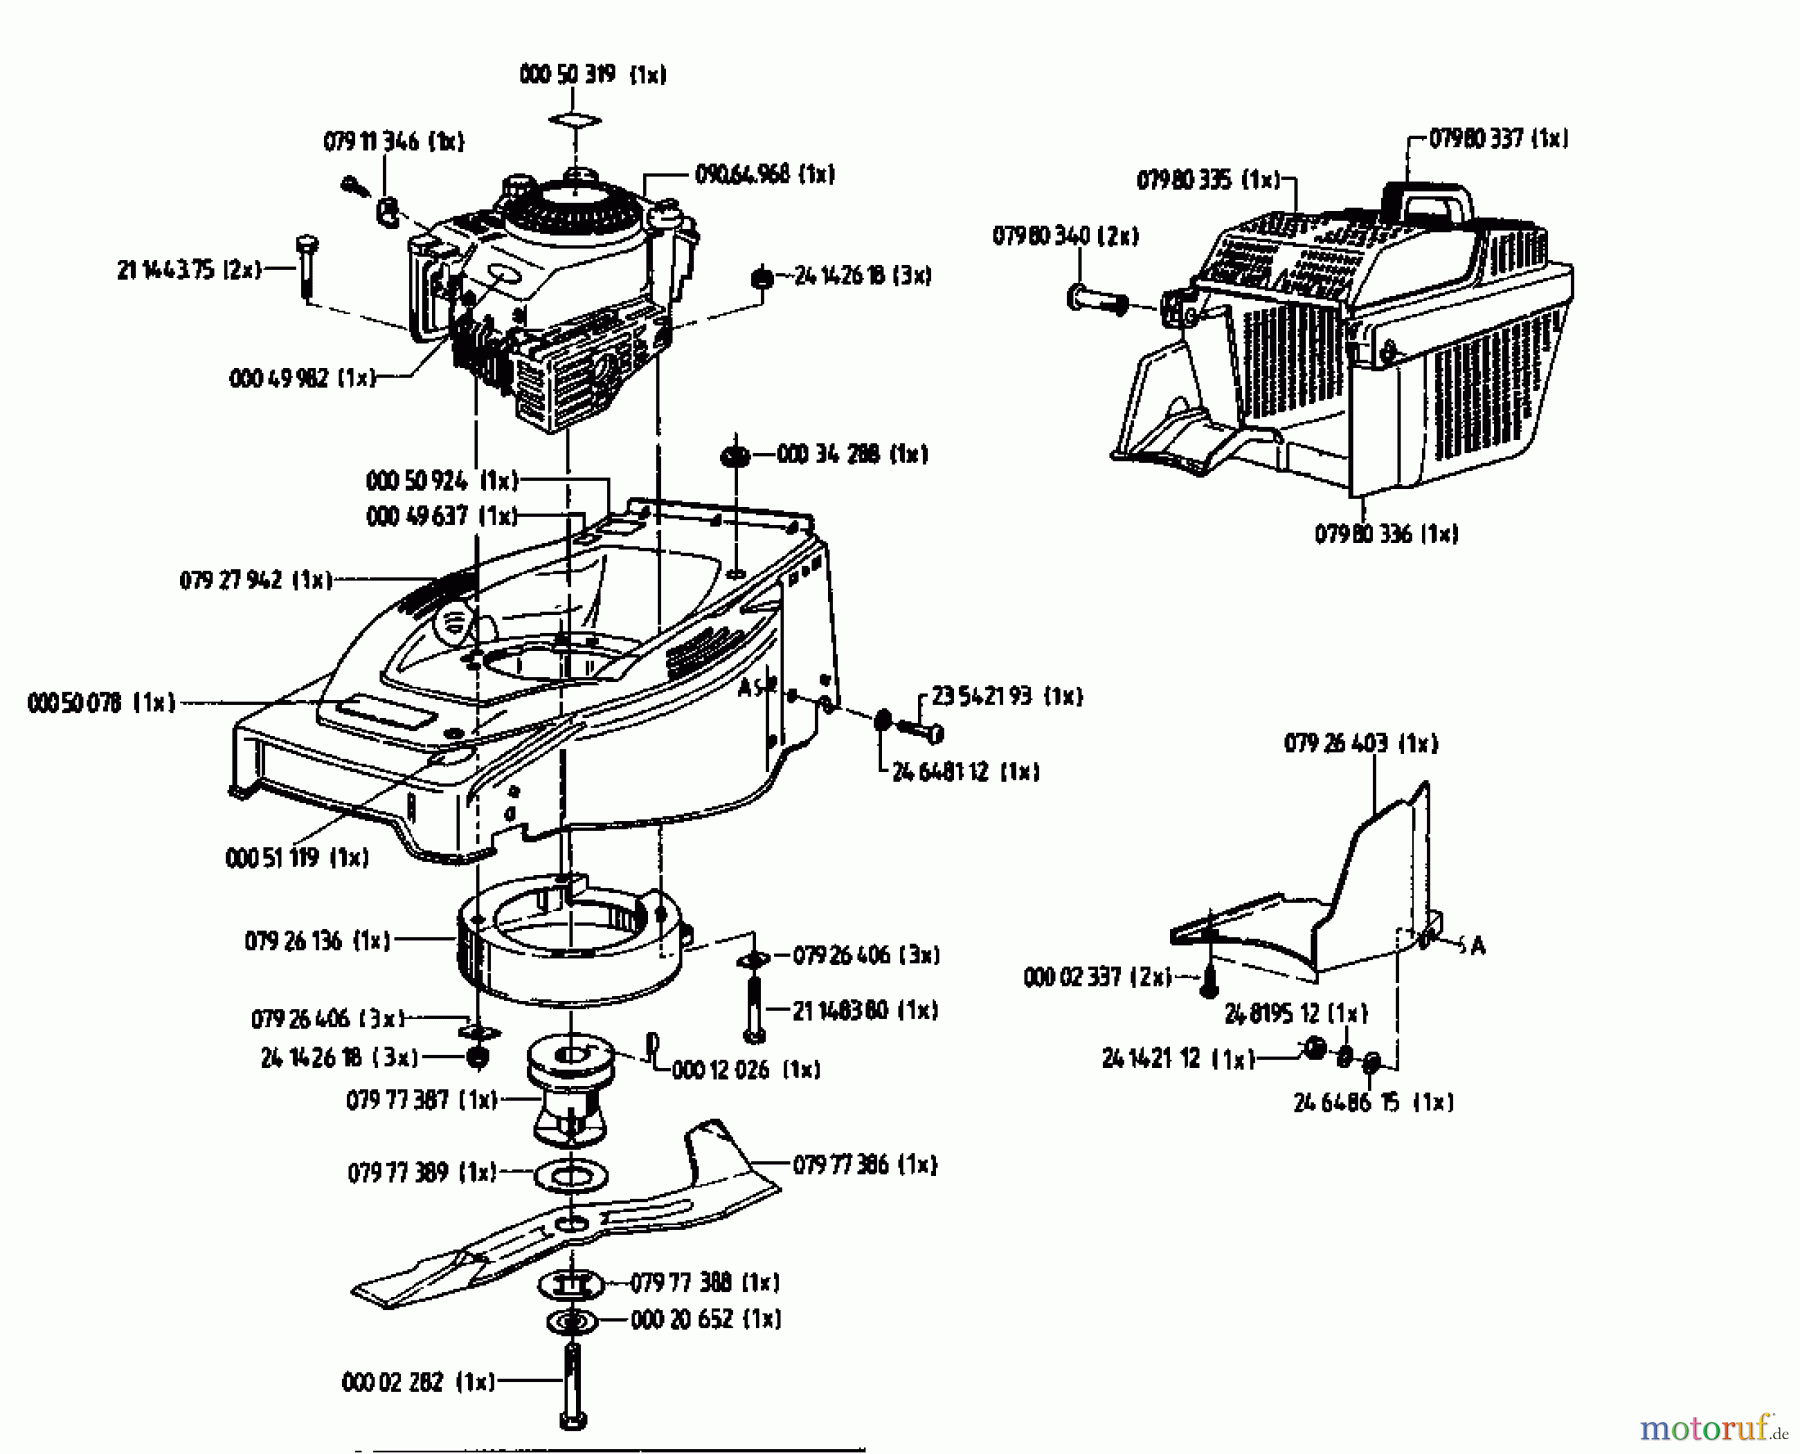  Gutbrod Motormäher mit Antrieb HB 48 RL 02815.01  (1993) Grundgerät